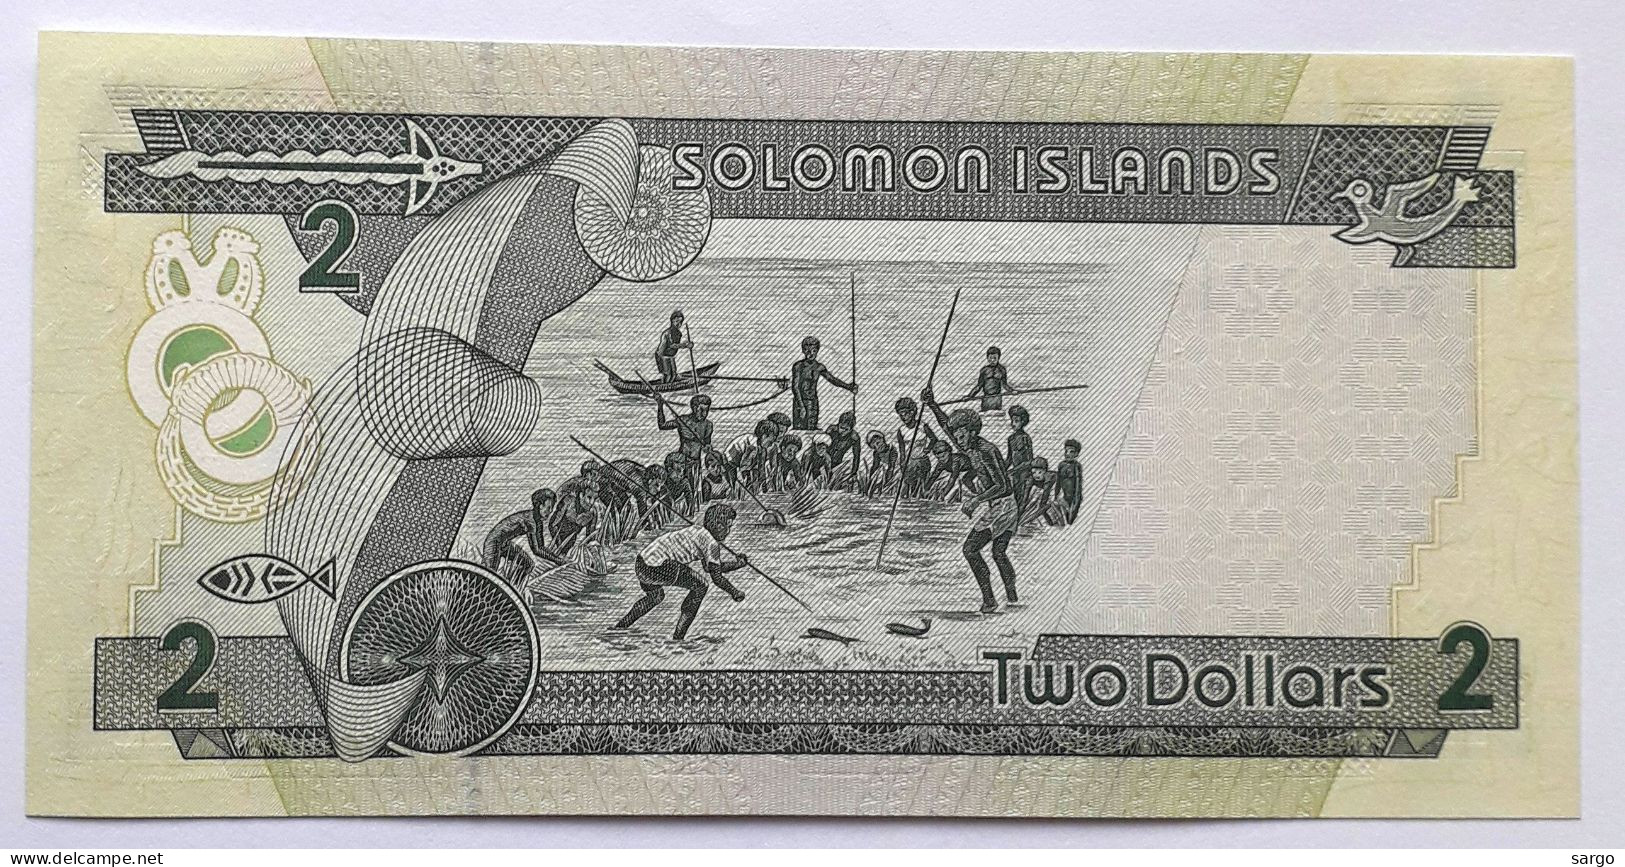 SOLOMON  - 2 DOLLARS - P 18  (1997) - UNC -  BANKNOTES - PAPER MONEY - San Tomé Y Príncipe